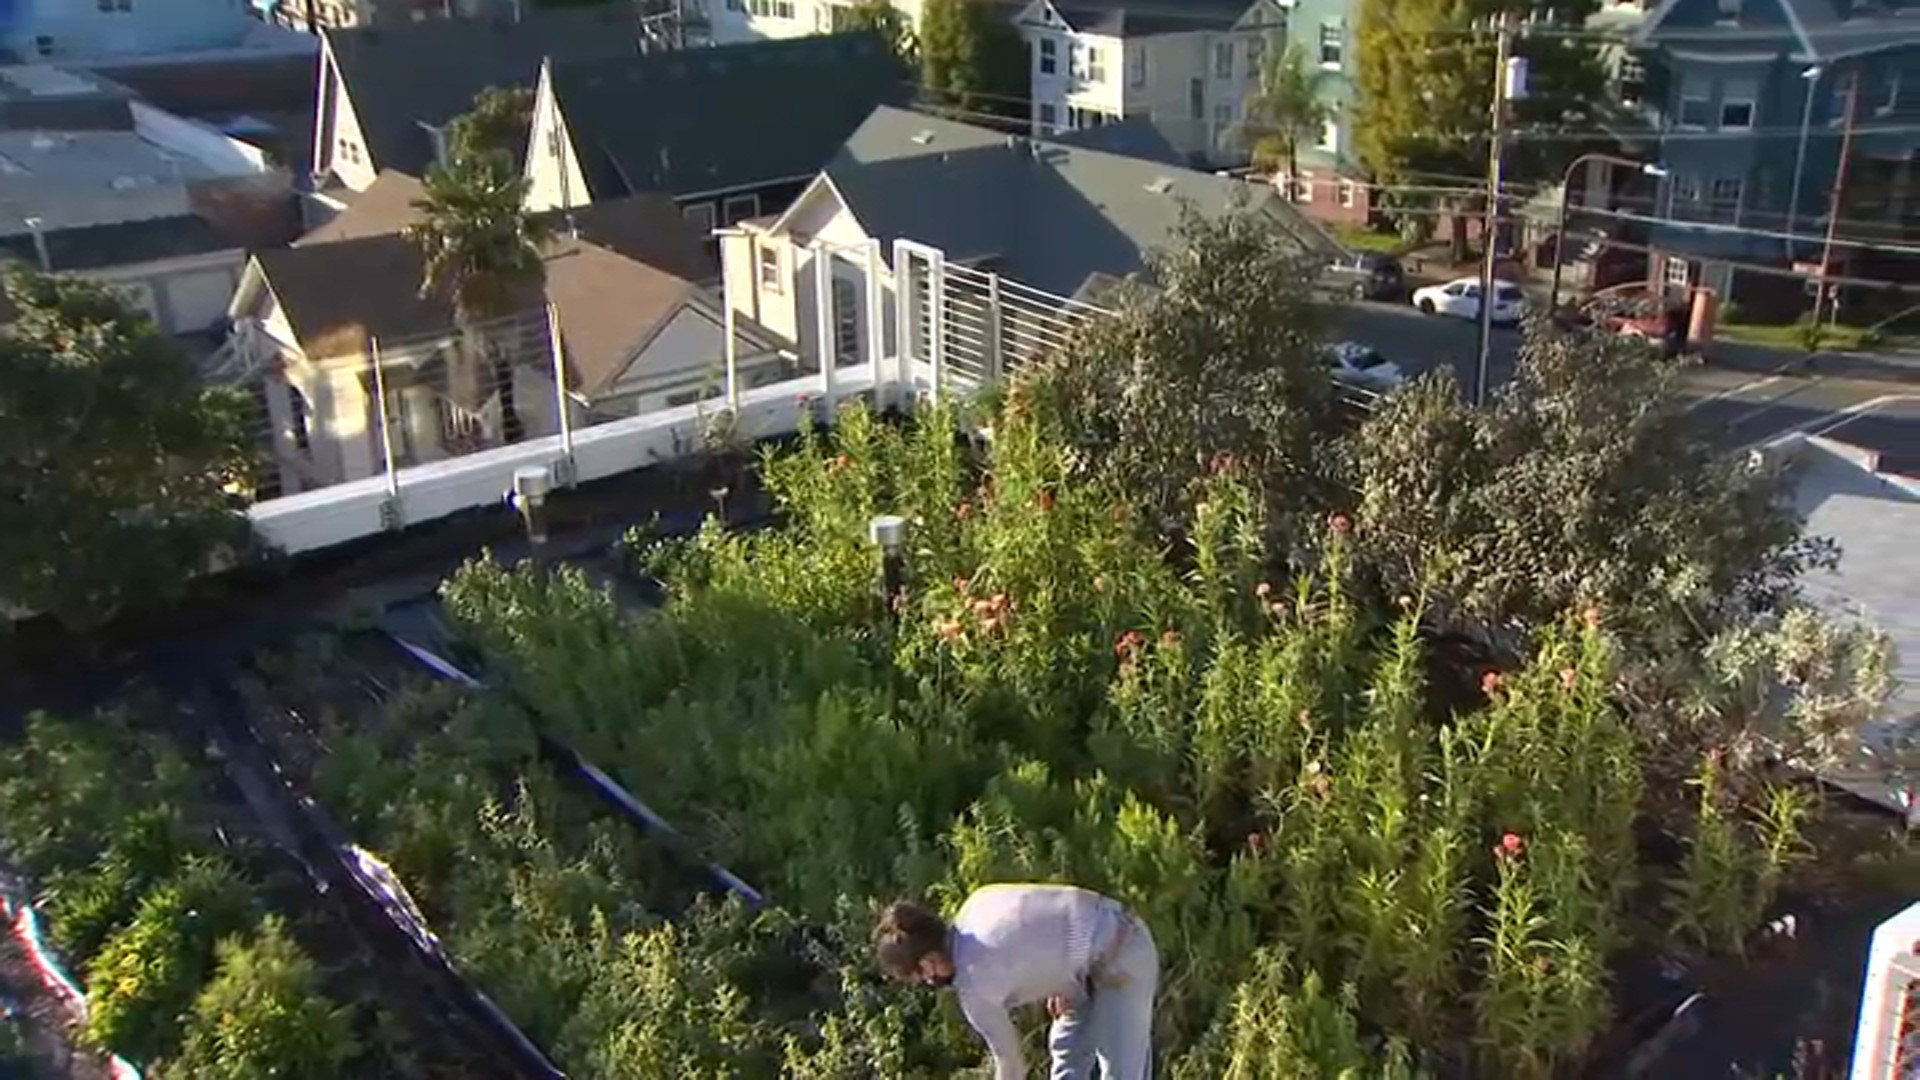 Inside Bluma Flower Farm in Berkeley, a Stunning Rooftop Garden